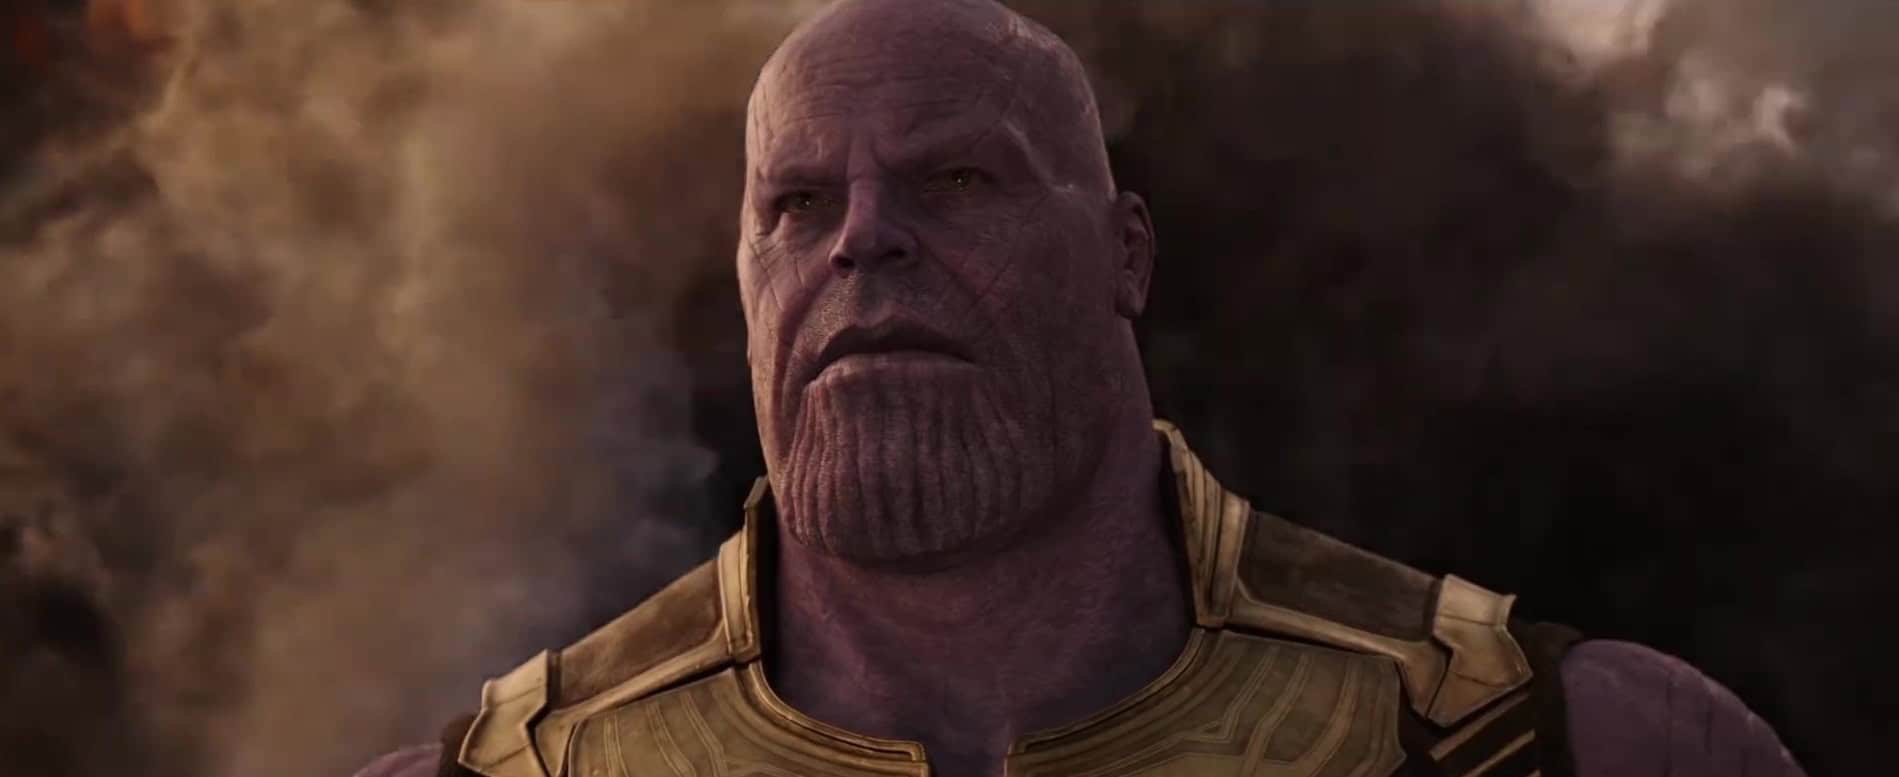 Josh Brolin in Avengers: Infinity War (2018)